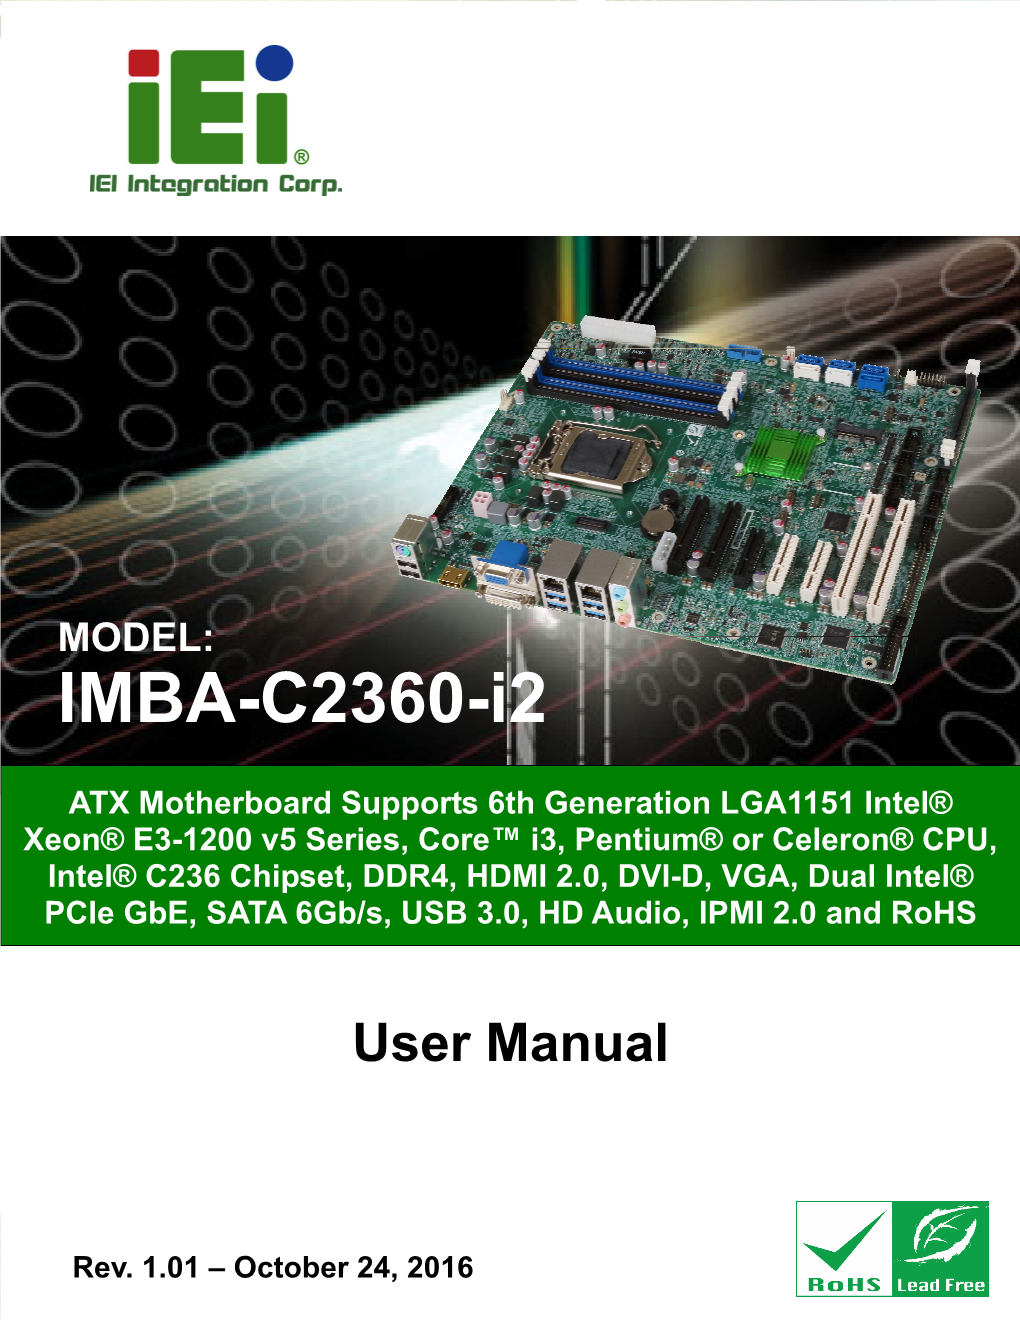 IMBA-C2360-I2 ATX Motherboard